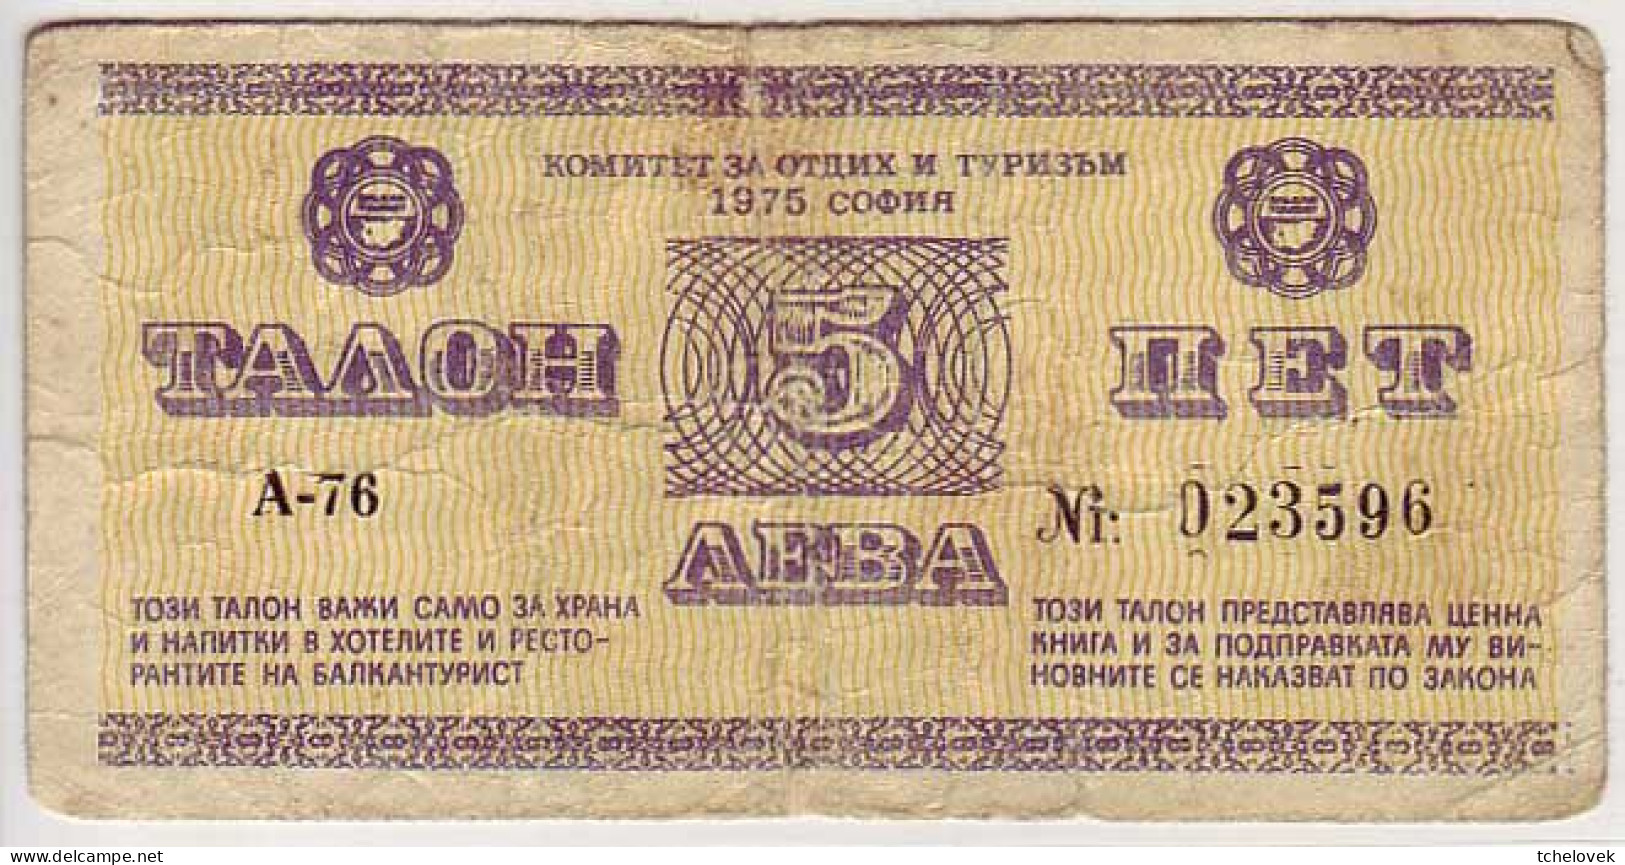 (Billets). Bulgarie Bulgaria. Foreing Exchange Certificate. Rare. Balkan Tourist. 1975. 5 Leva Serie A-76 N° 023596 - Bulgarie